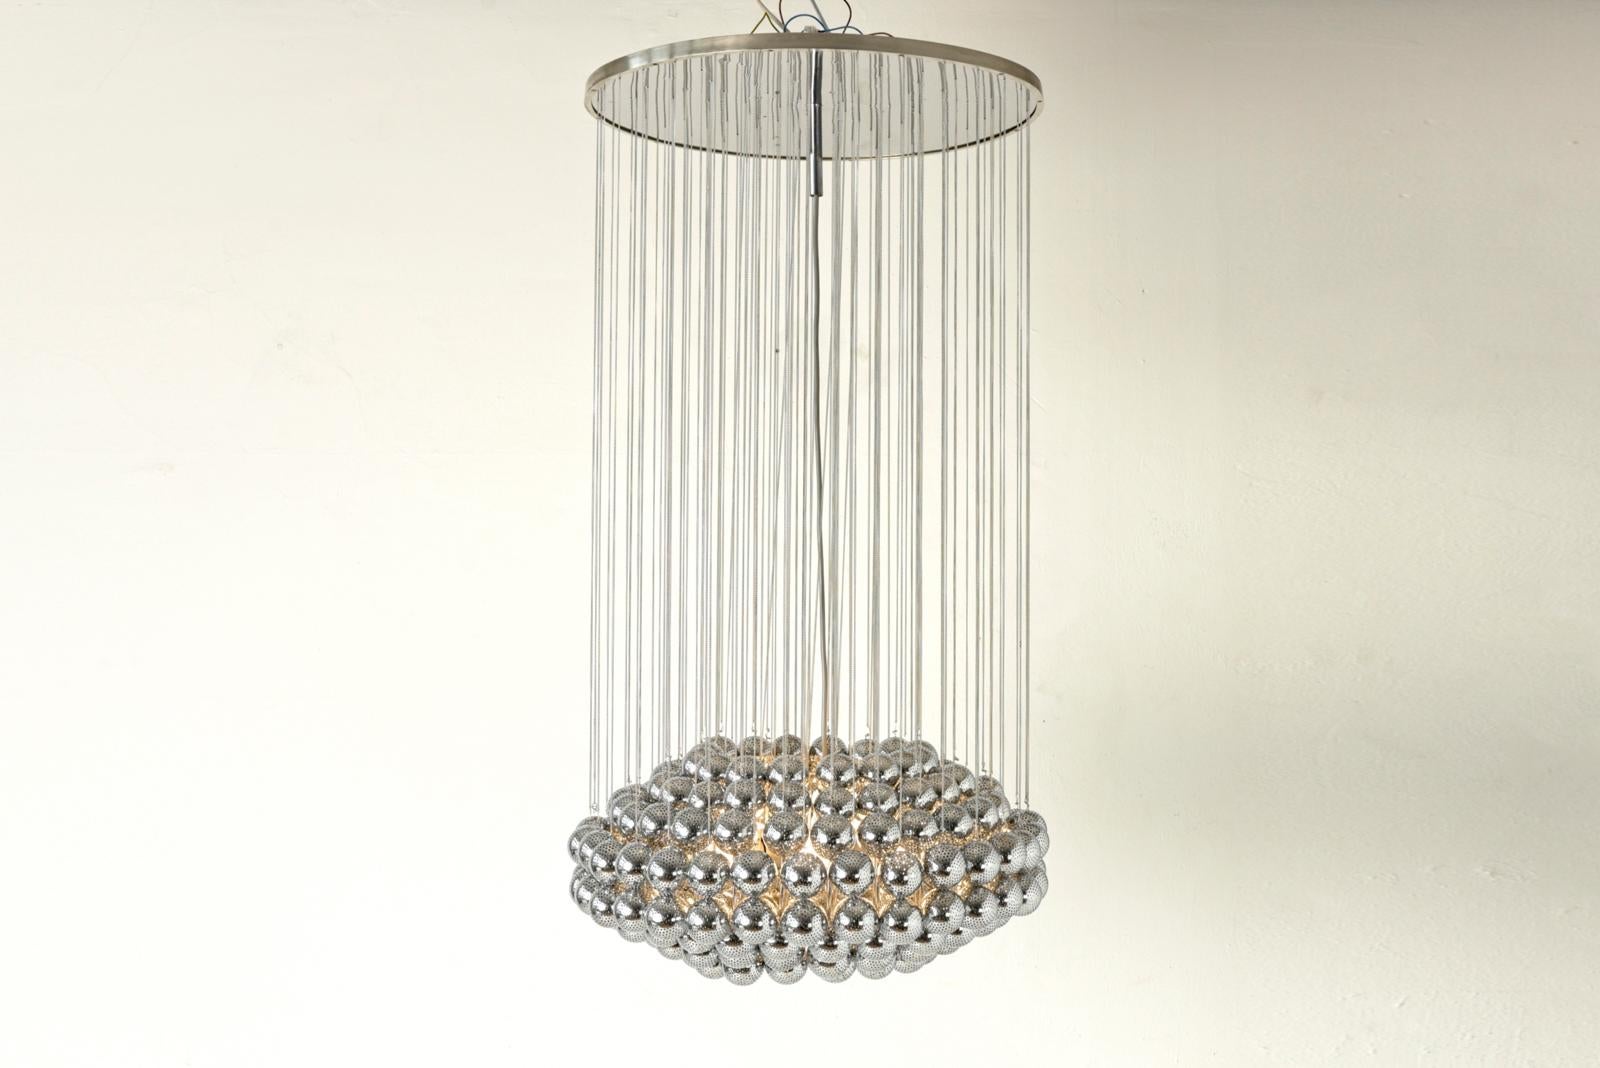 Mid-Century Modern Pendant Lamp attr. to Verner Panton, Switzerland - 1969 For Sale